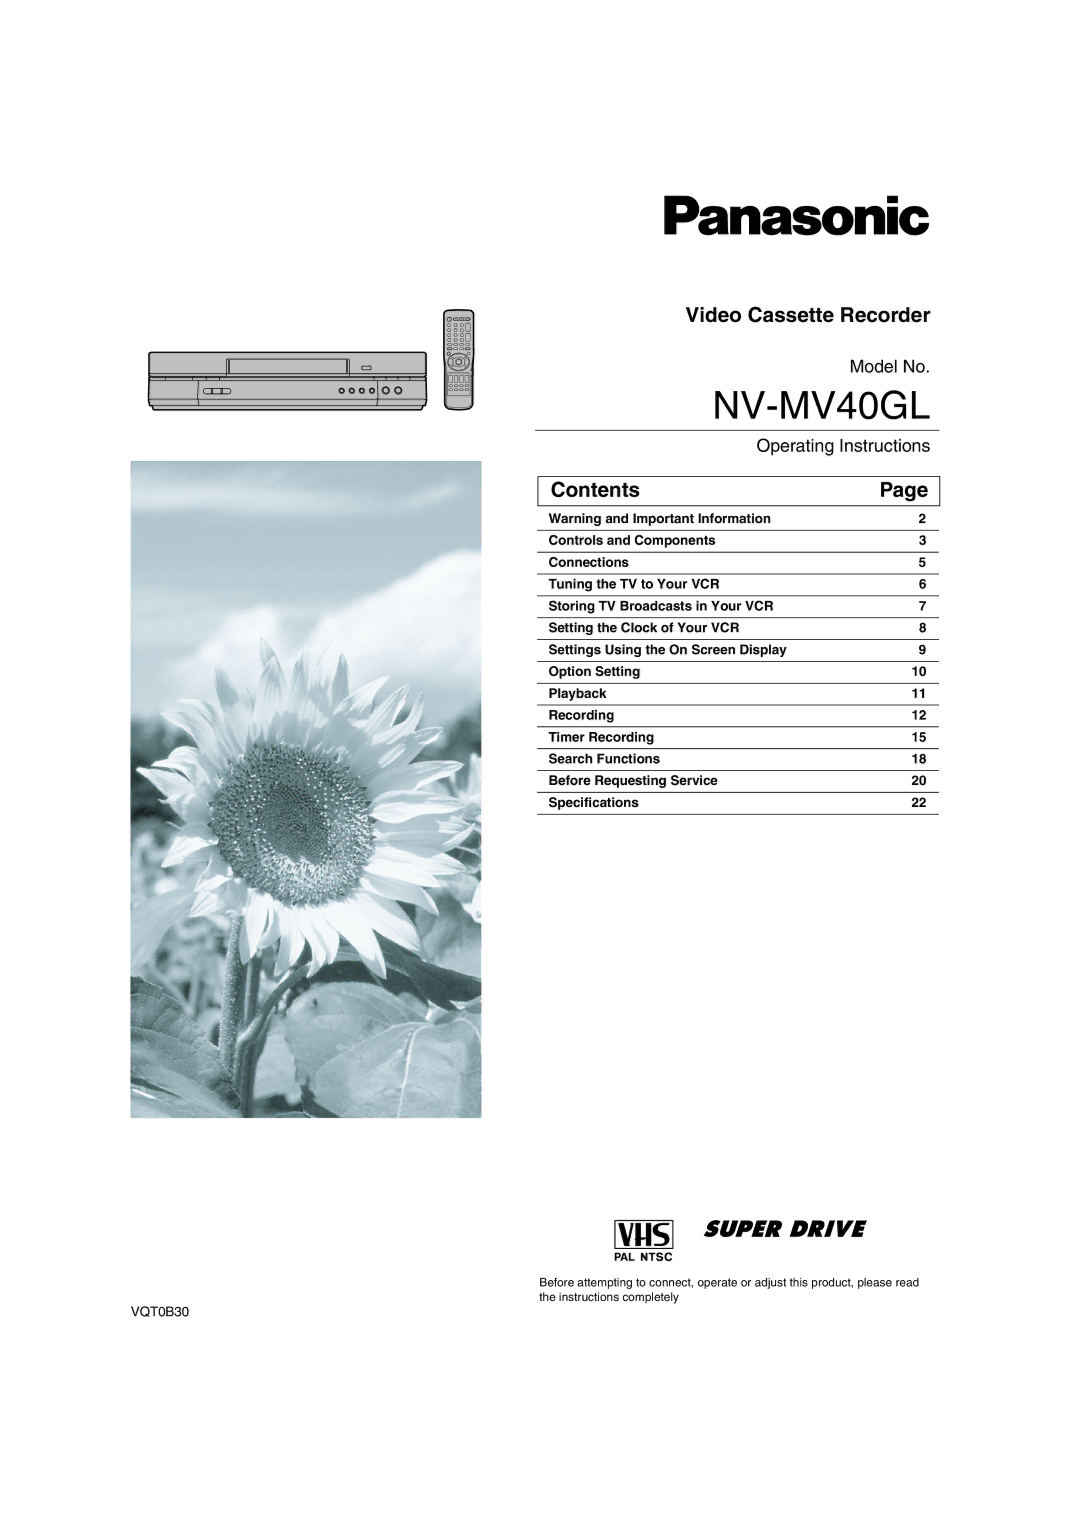 Panasonic NV-MV40GL specifications Video Cassette Recorder, Contents 